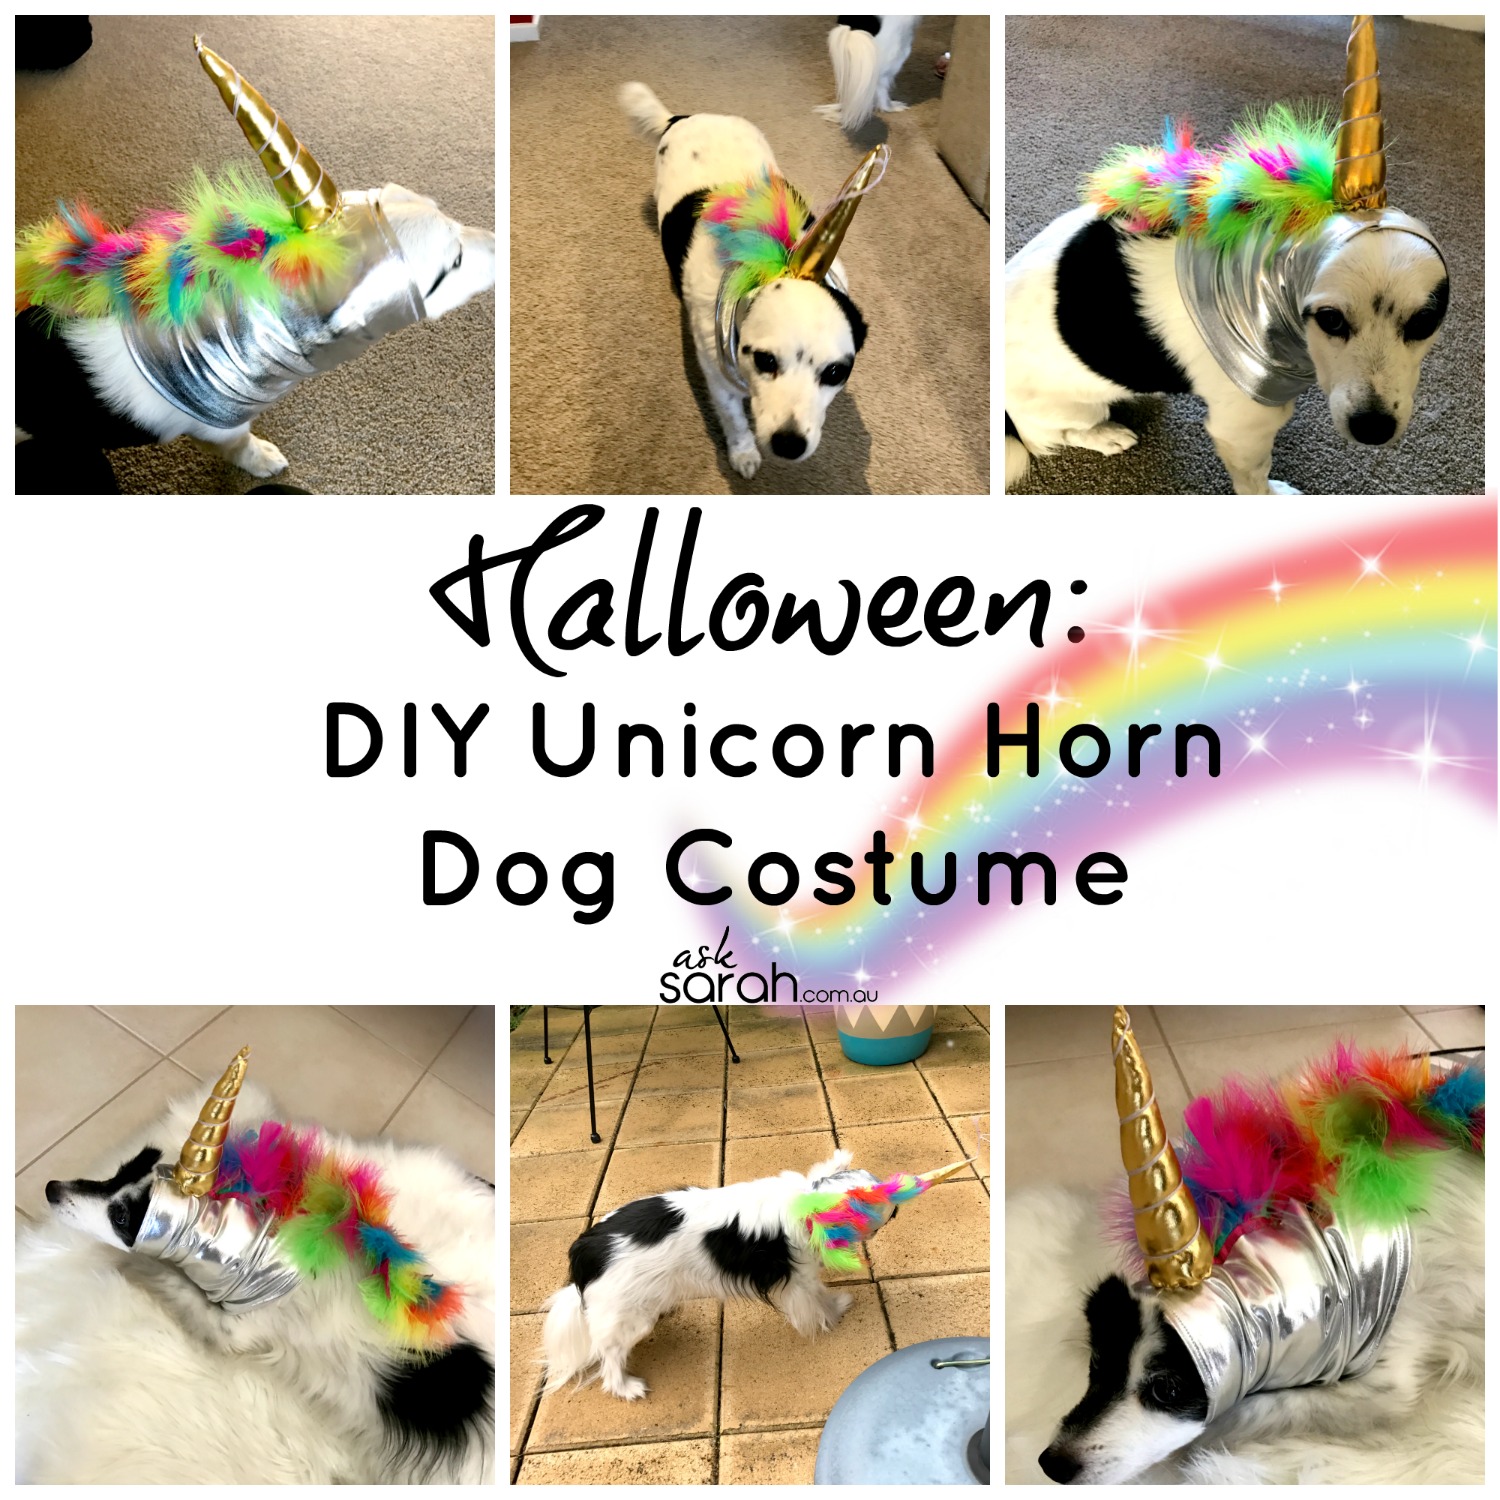 Halloween: Unicorn Horn Dog Costume {DIY Metallic & Rainbow Unicorn Snood Tutorial}